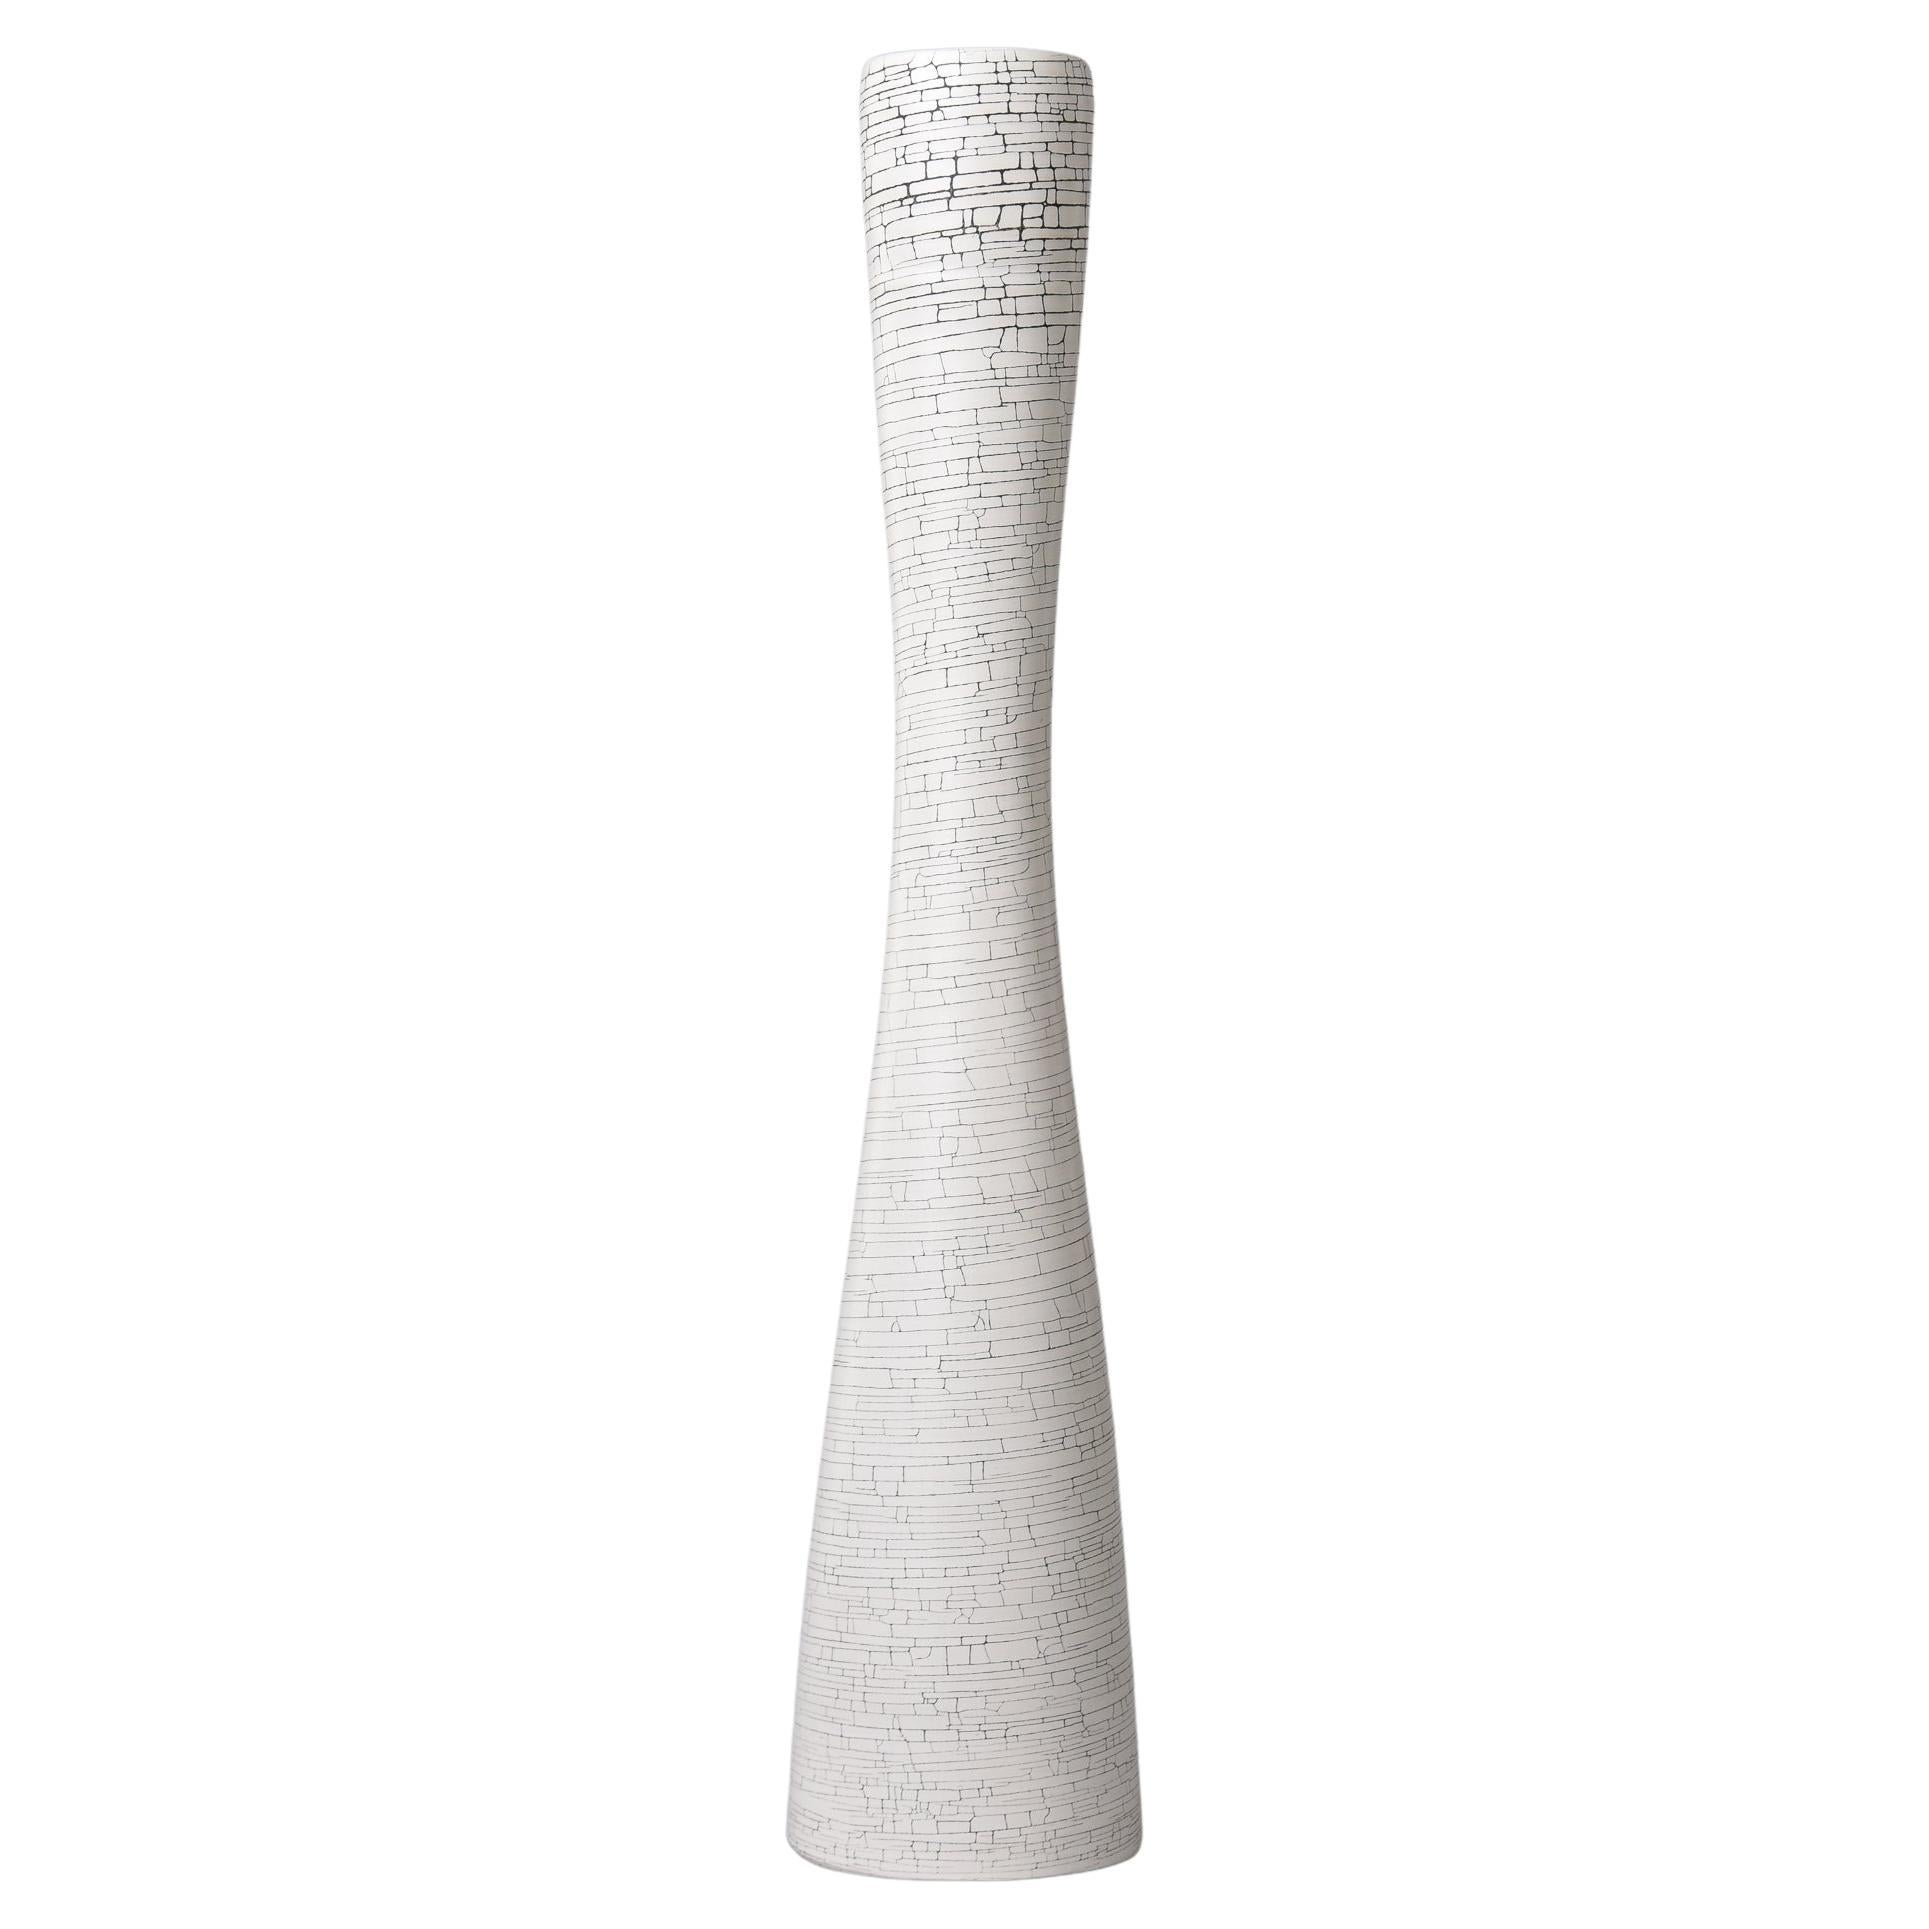 New Rina Menardi Tall White Crackle Flute Vase